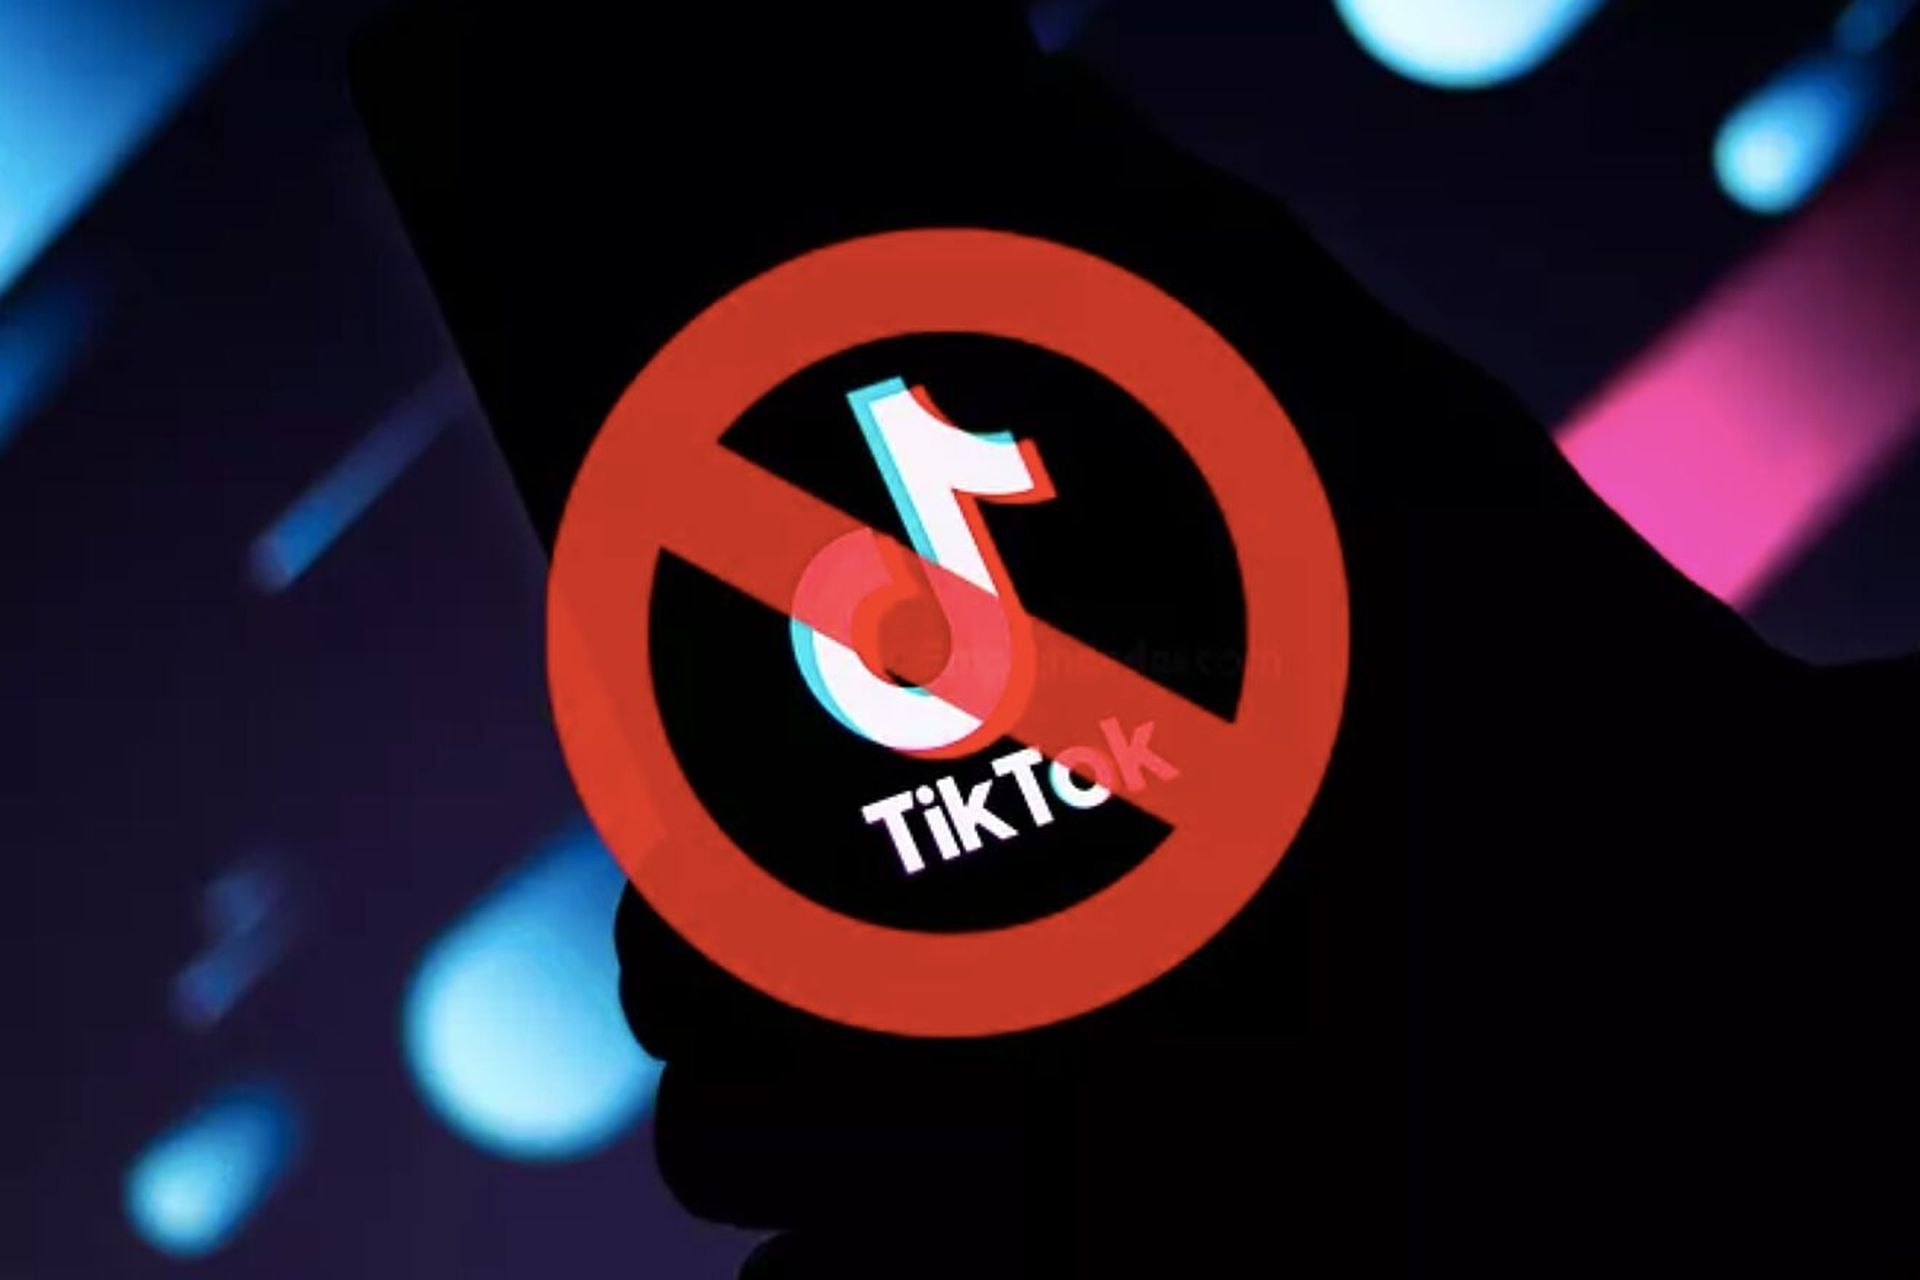 Why did Montana ban TikTok